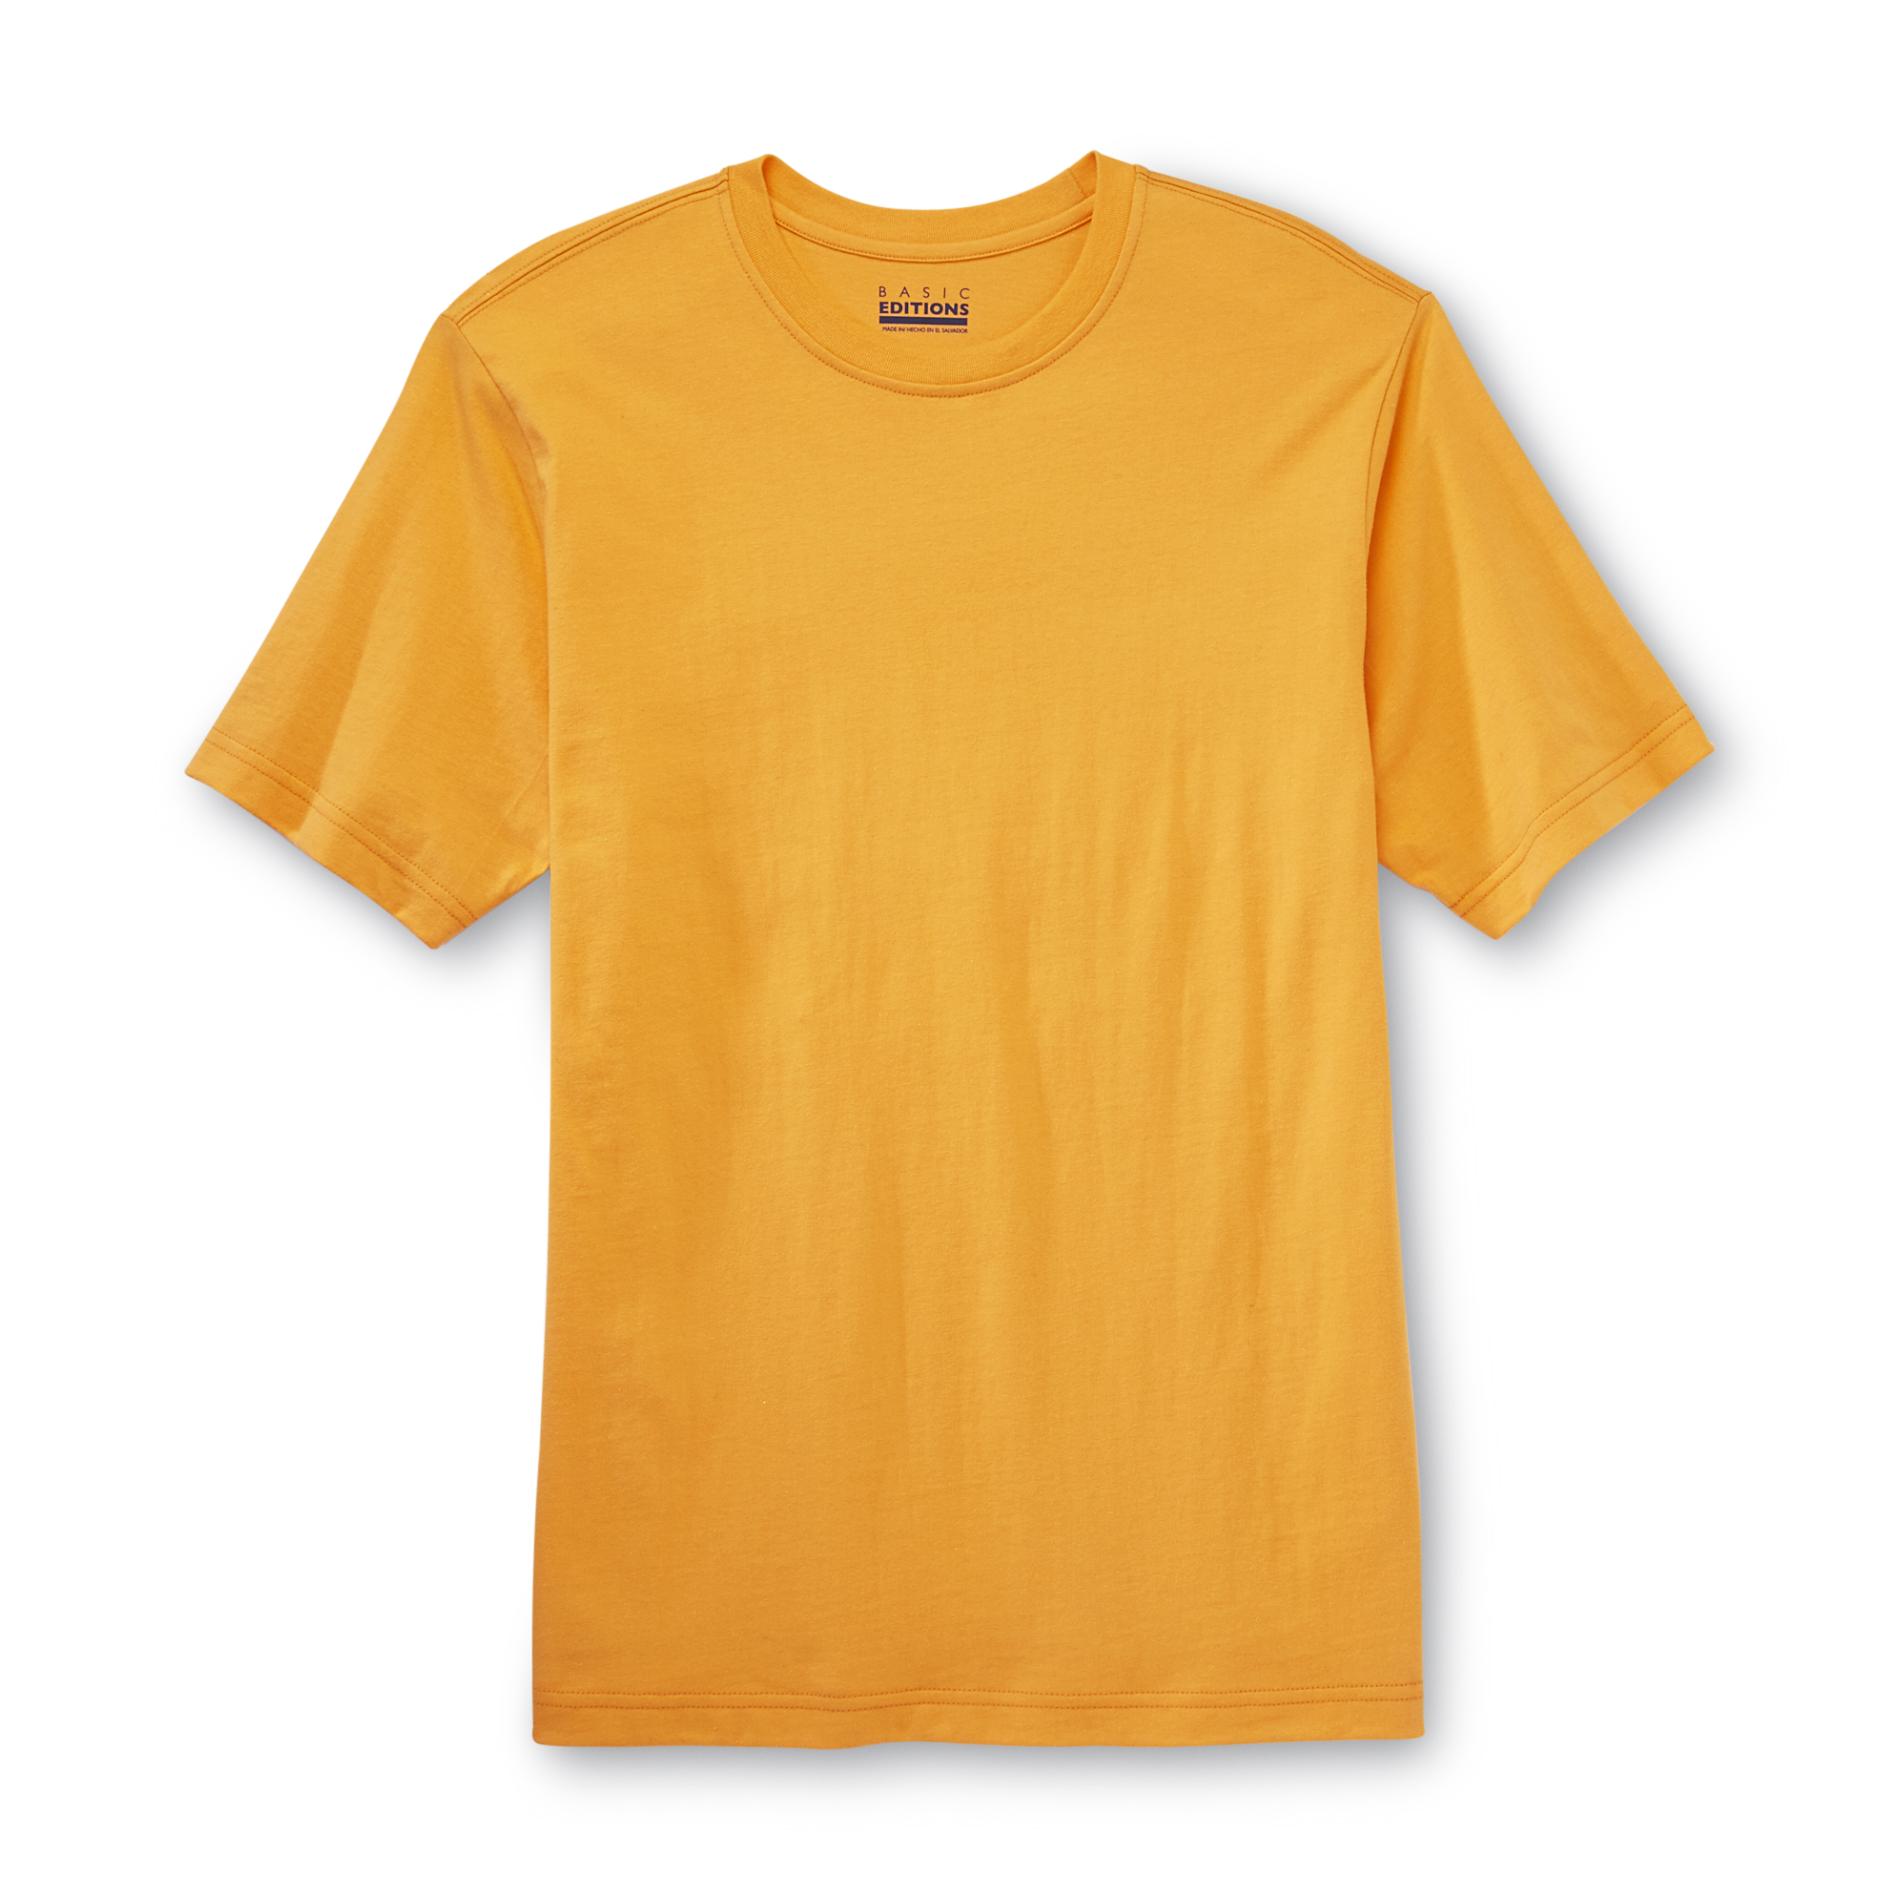 Basic Editions Men's Big & Tall Short-Sleeve T-Shirt